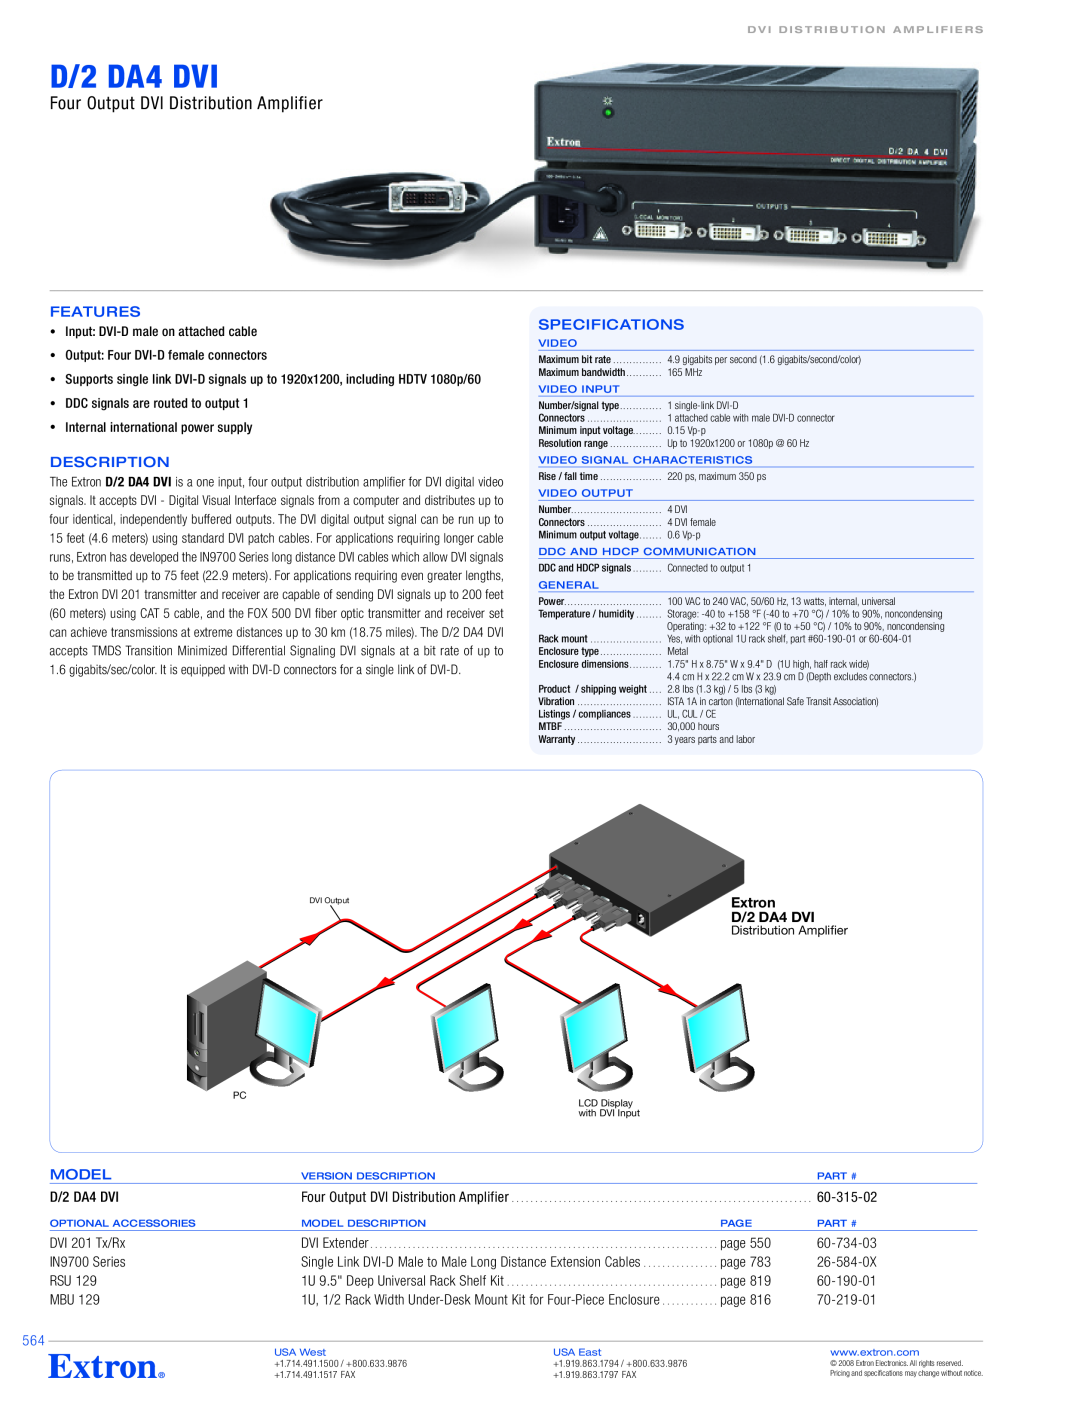 Extron electronic D/2 DA4 DVI manual Installation, Description, Indicators, Direct Digital Distribution Amplifier 